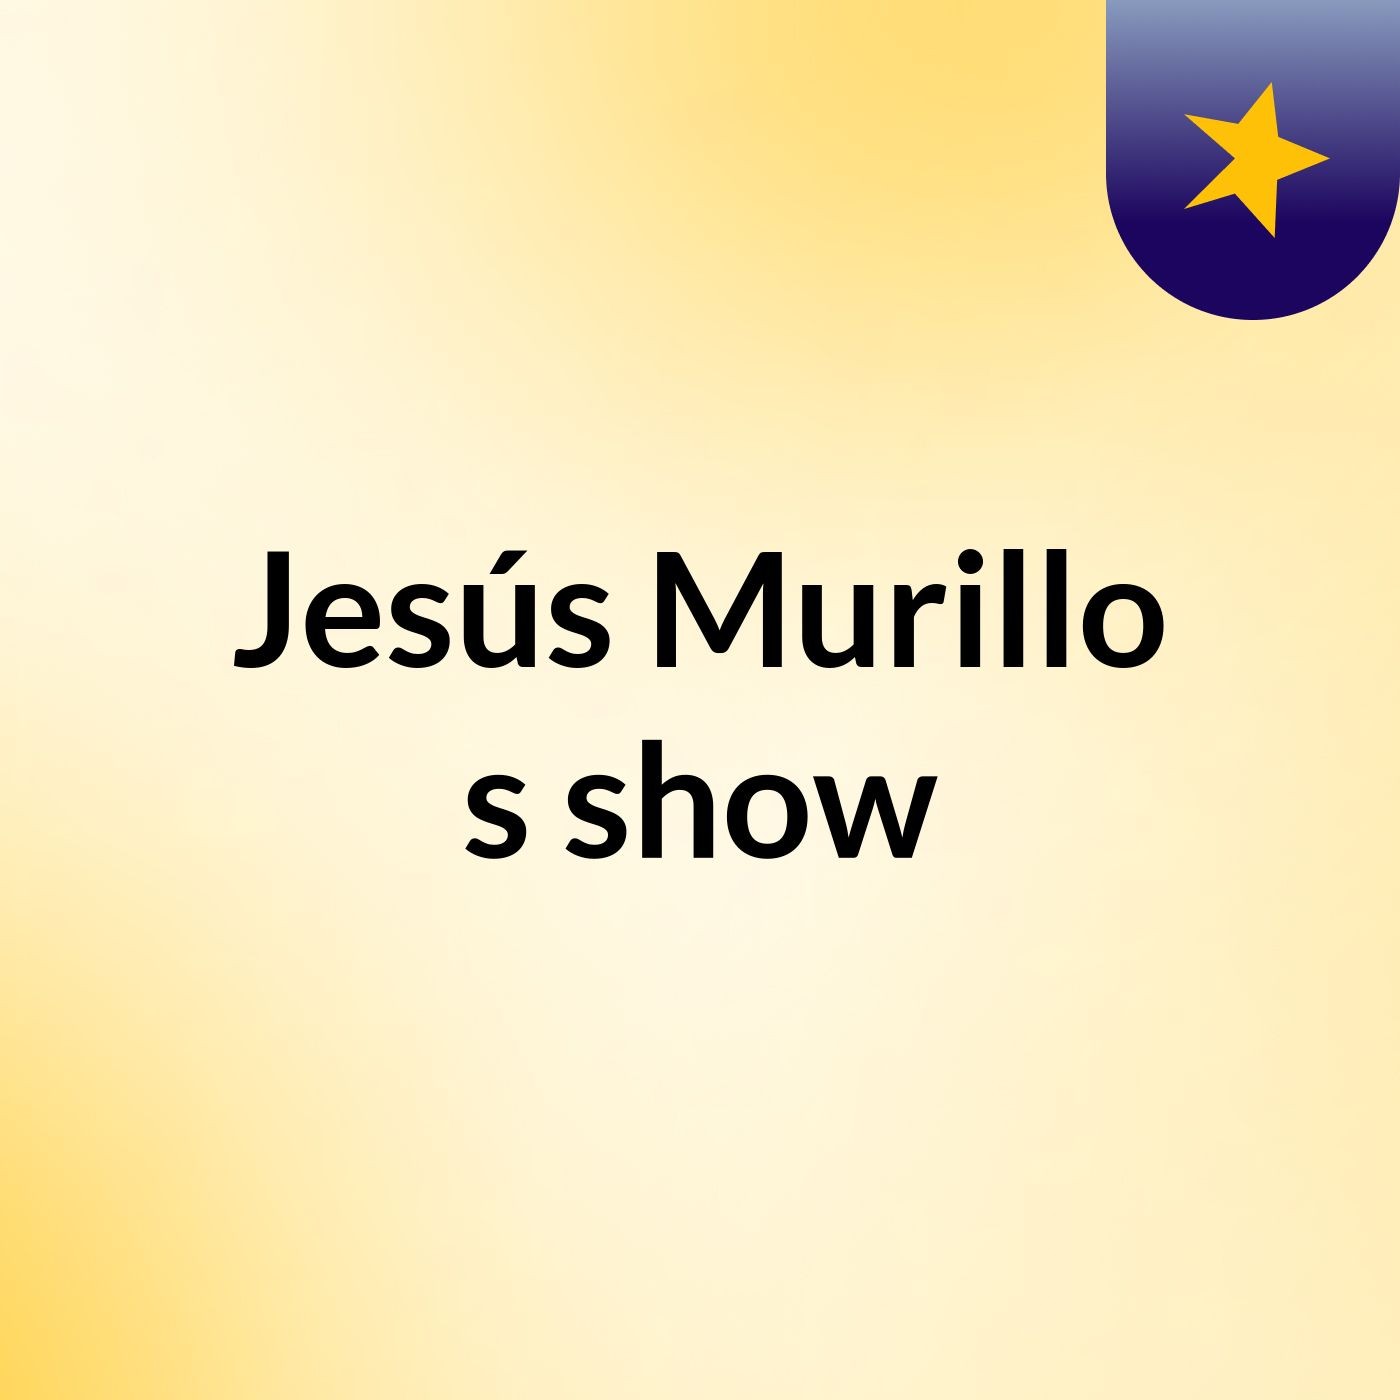 Jesús Murillo's show